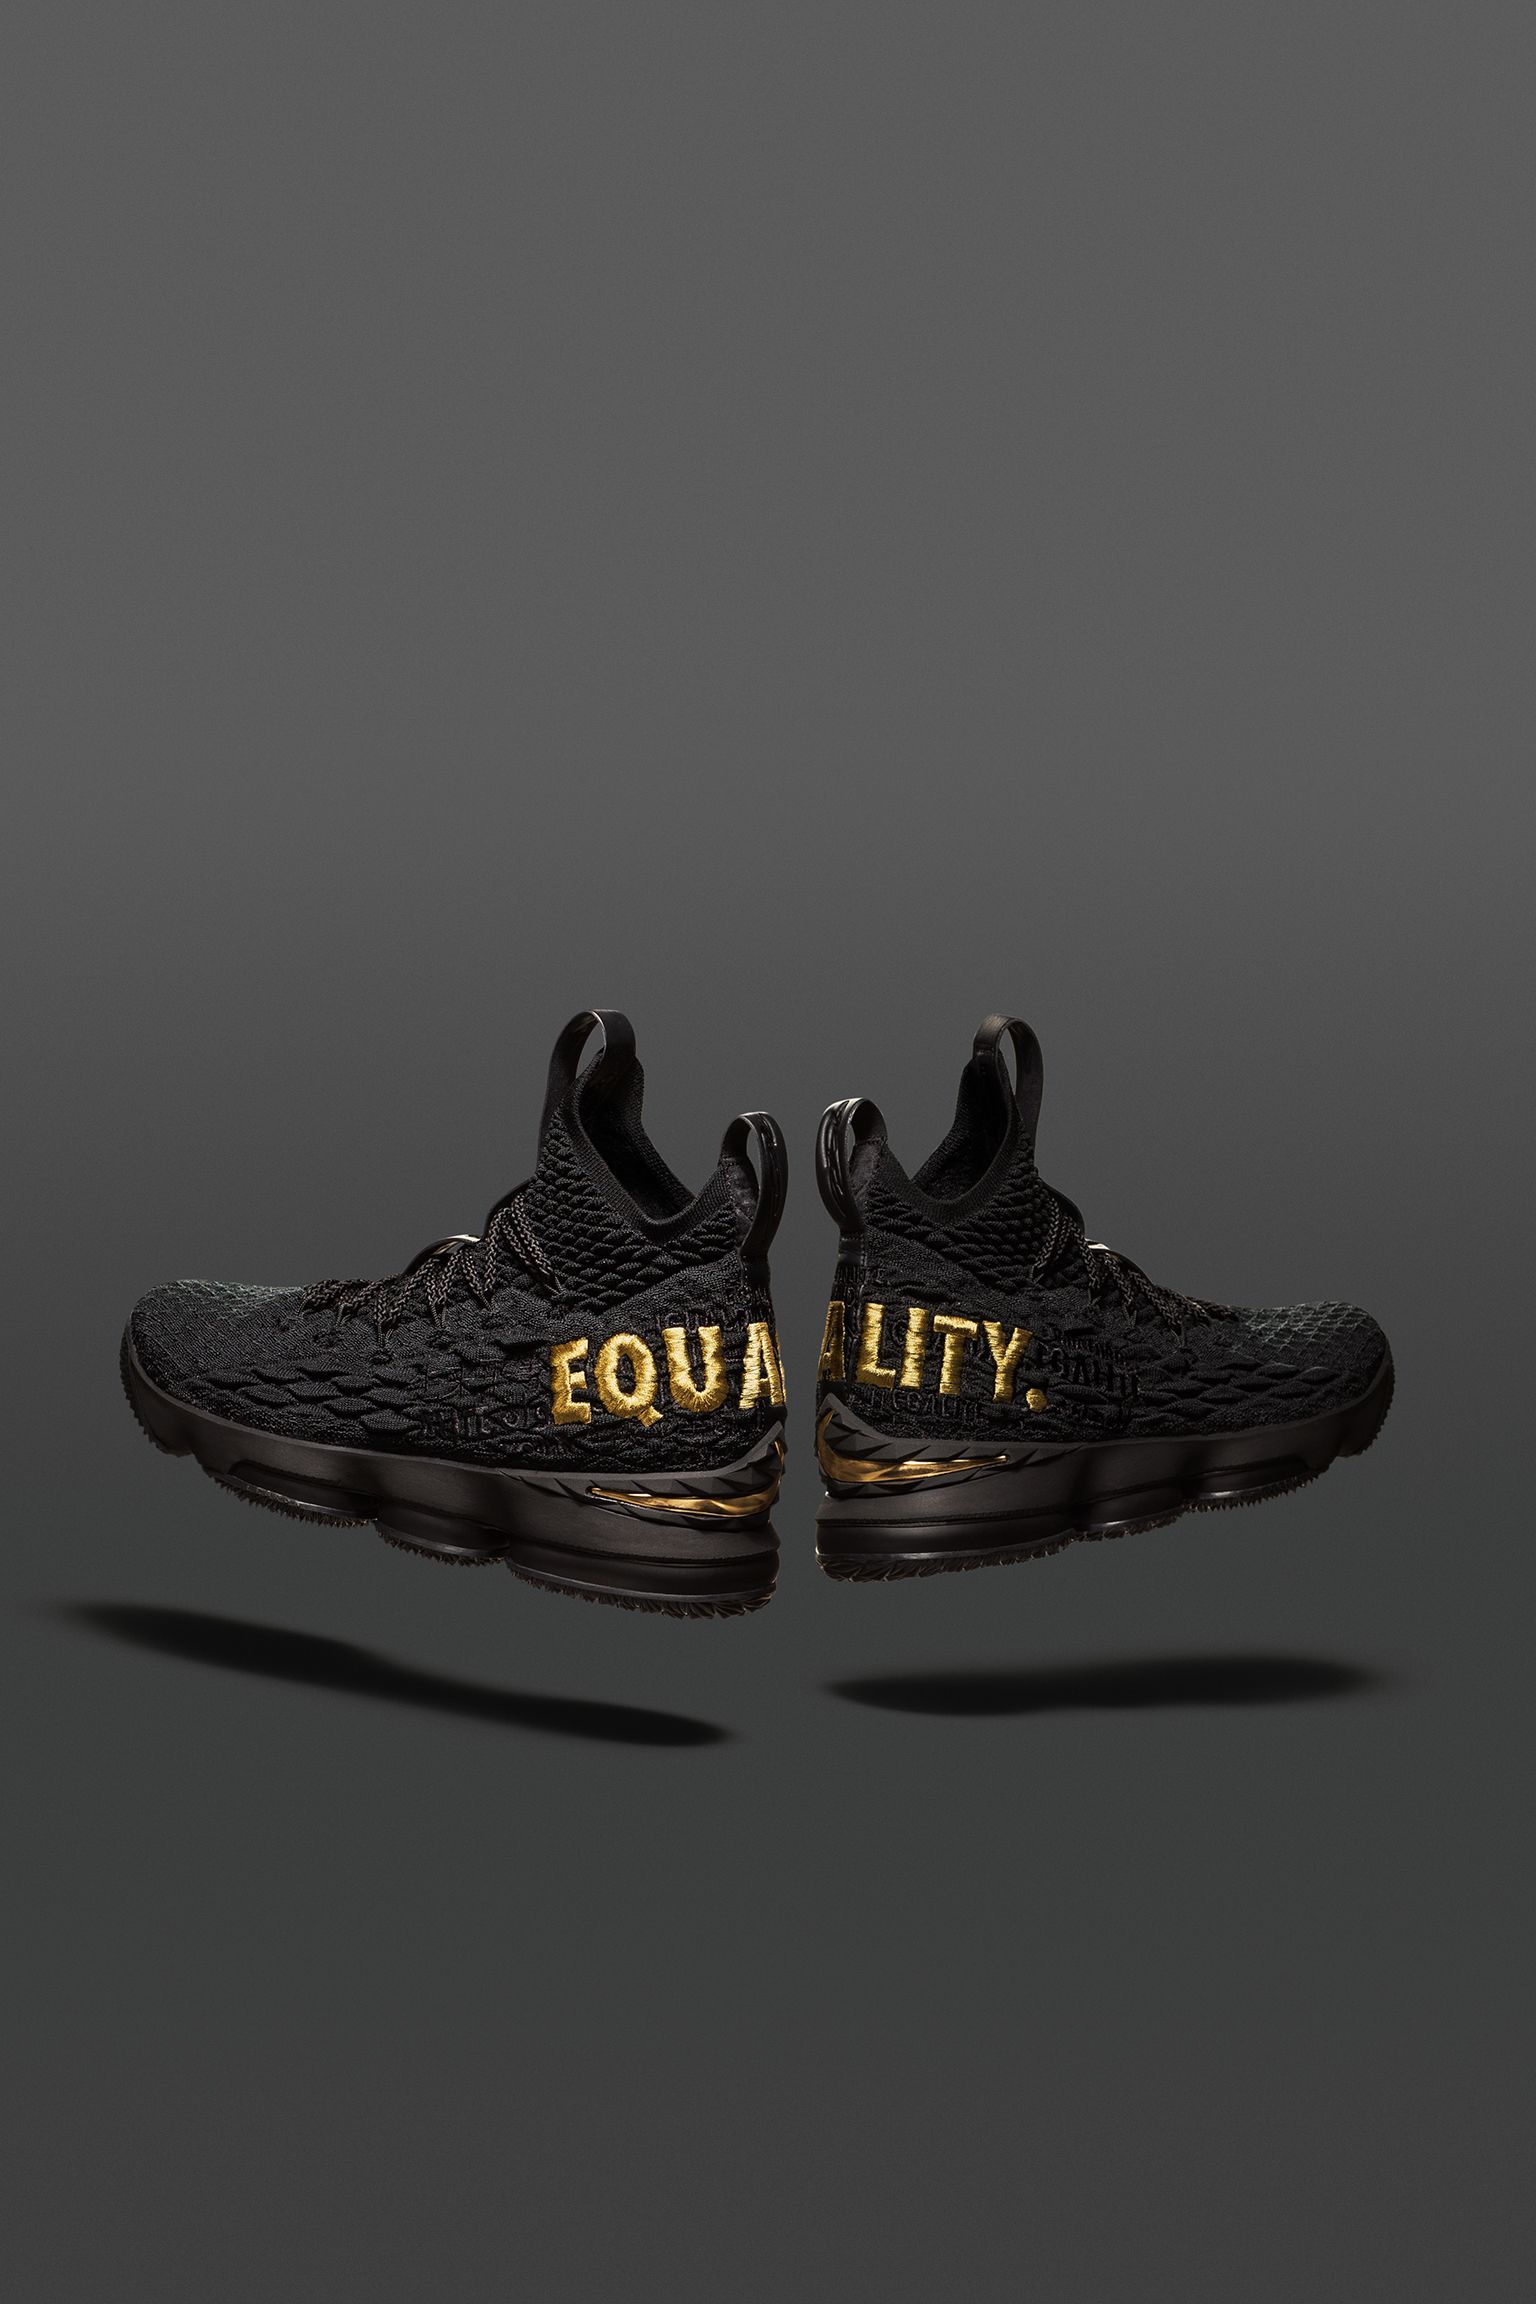 equality lebron shoes